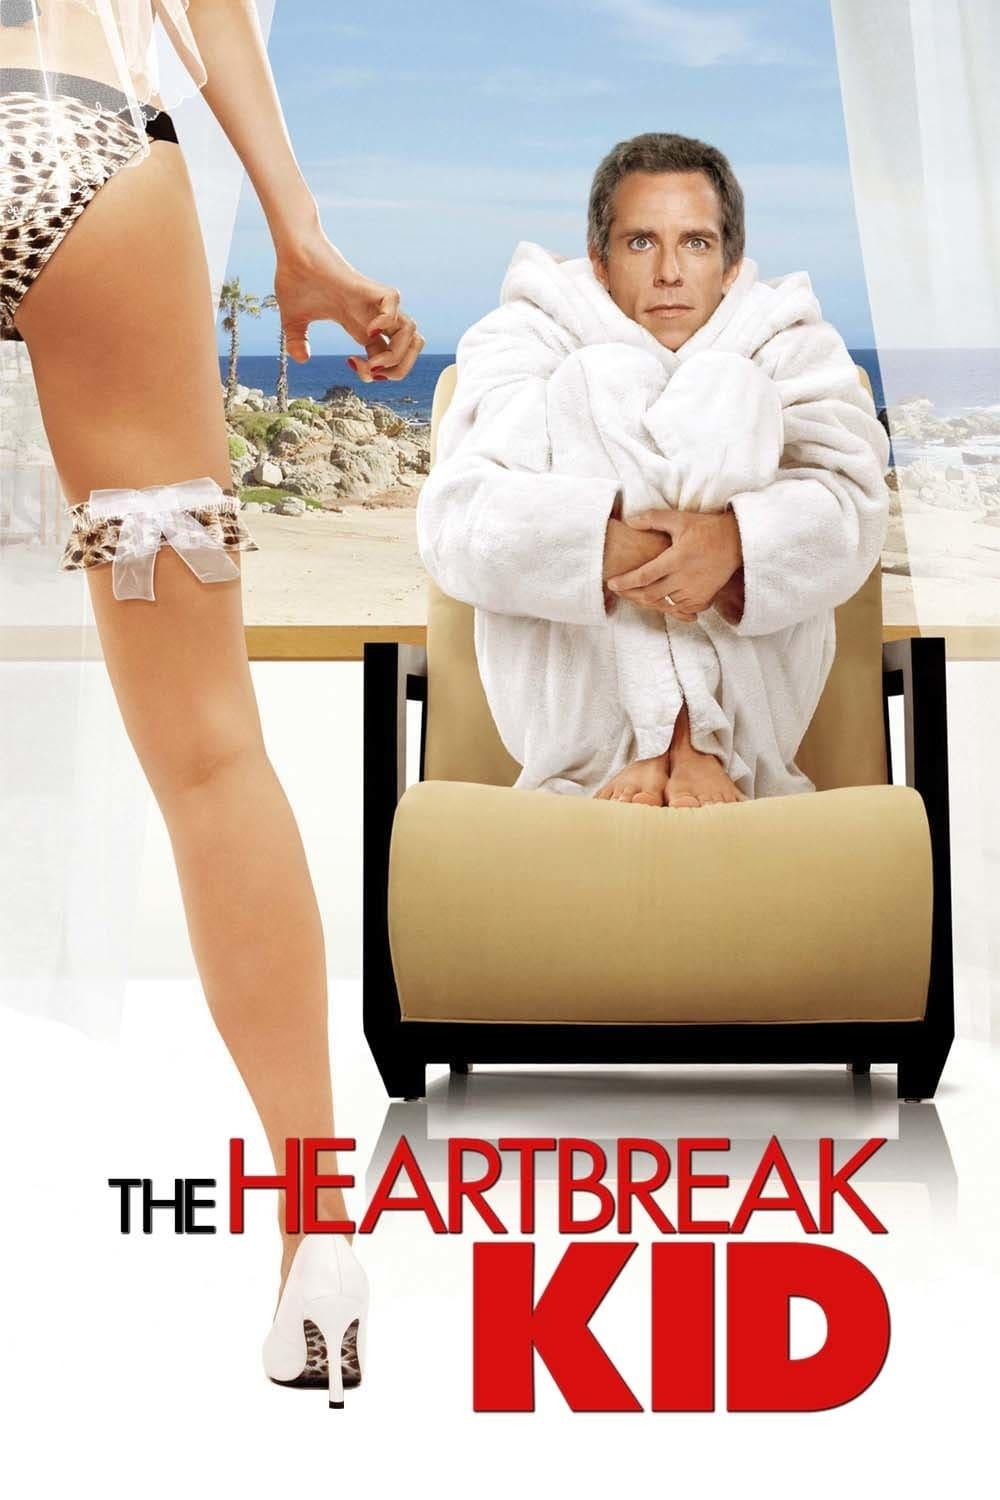 The Heartbreak Kid poster